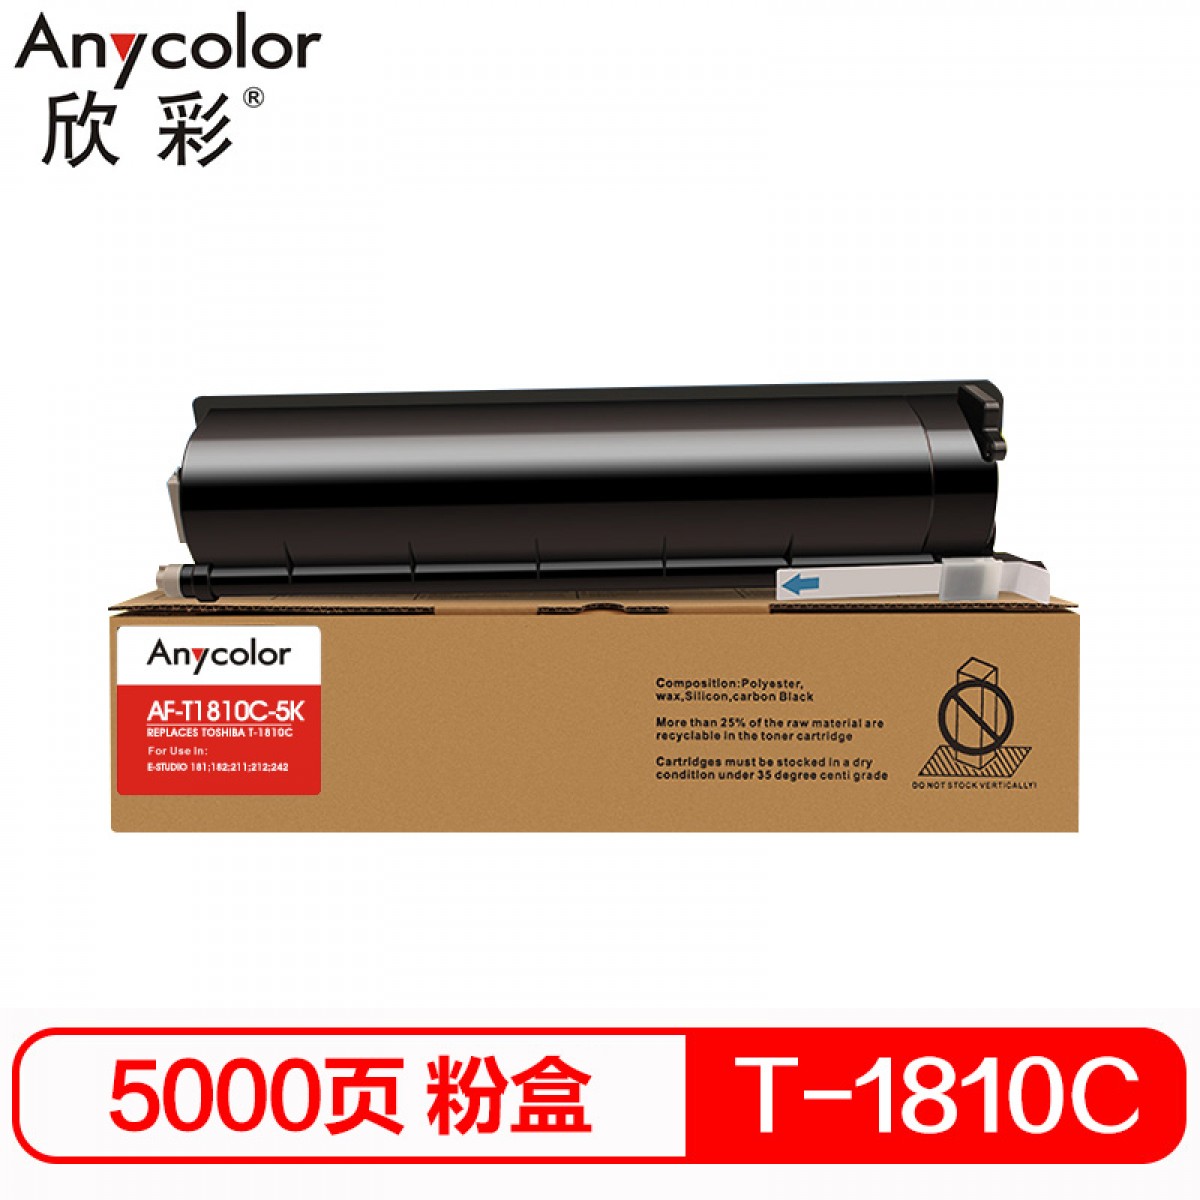 欣彩（Anycolor）T-1810C-5K墨粉盒 AF-T1810C-5K 适用东芝E-STUDIO 181 182 211 212 242 复印机墨粉